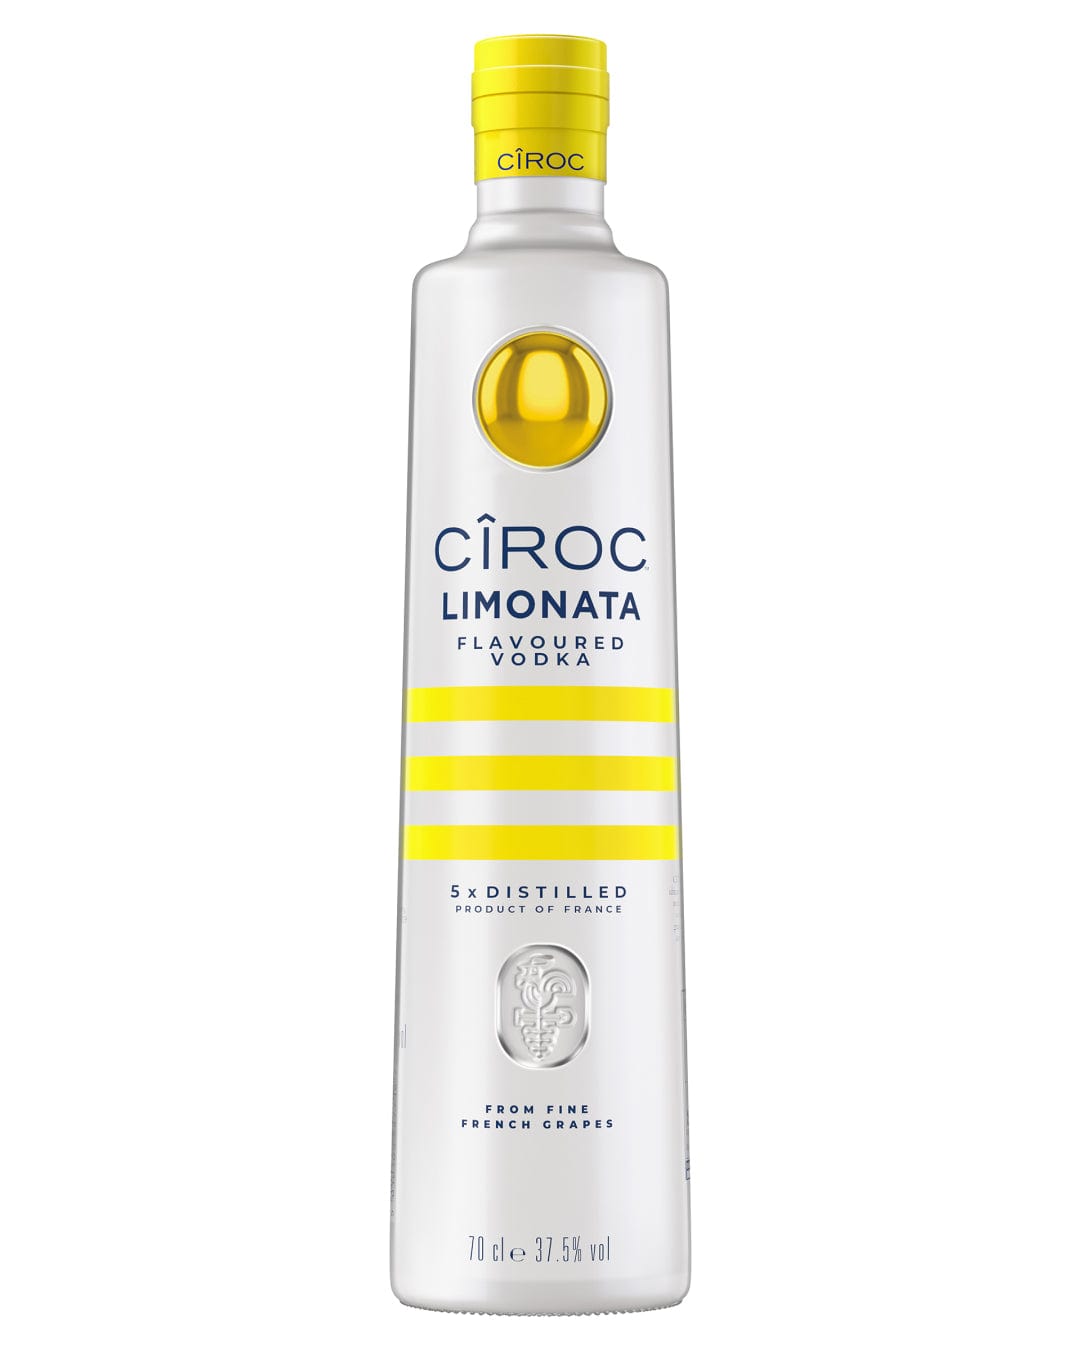 Ciroc Limonata Flavoured Vodka, 70 cl Spirits